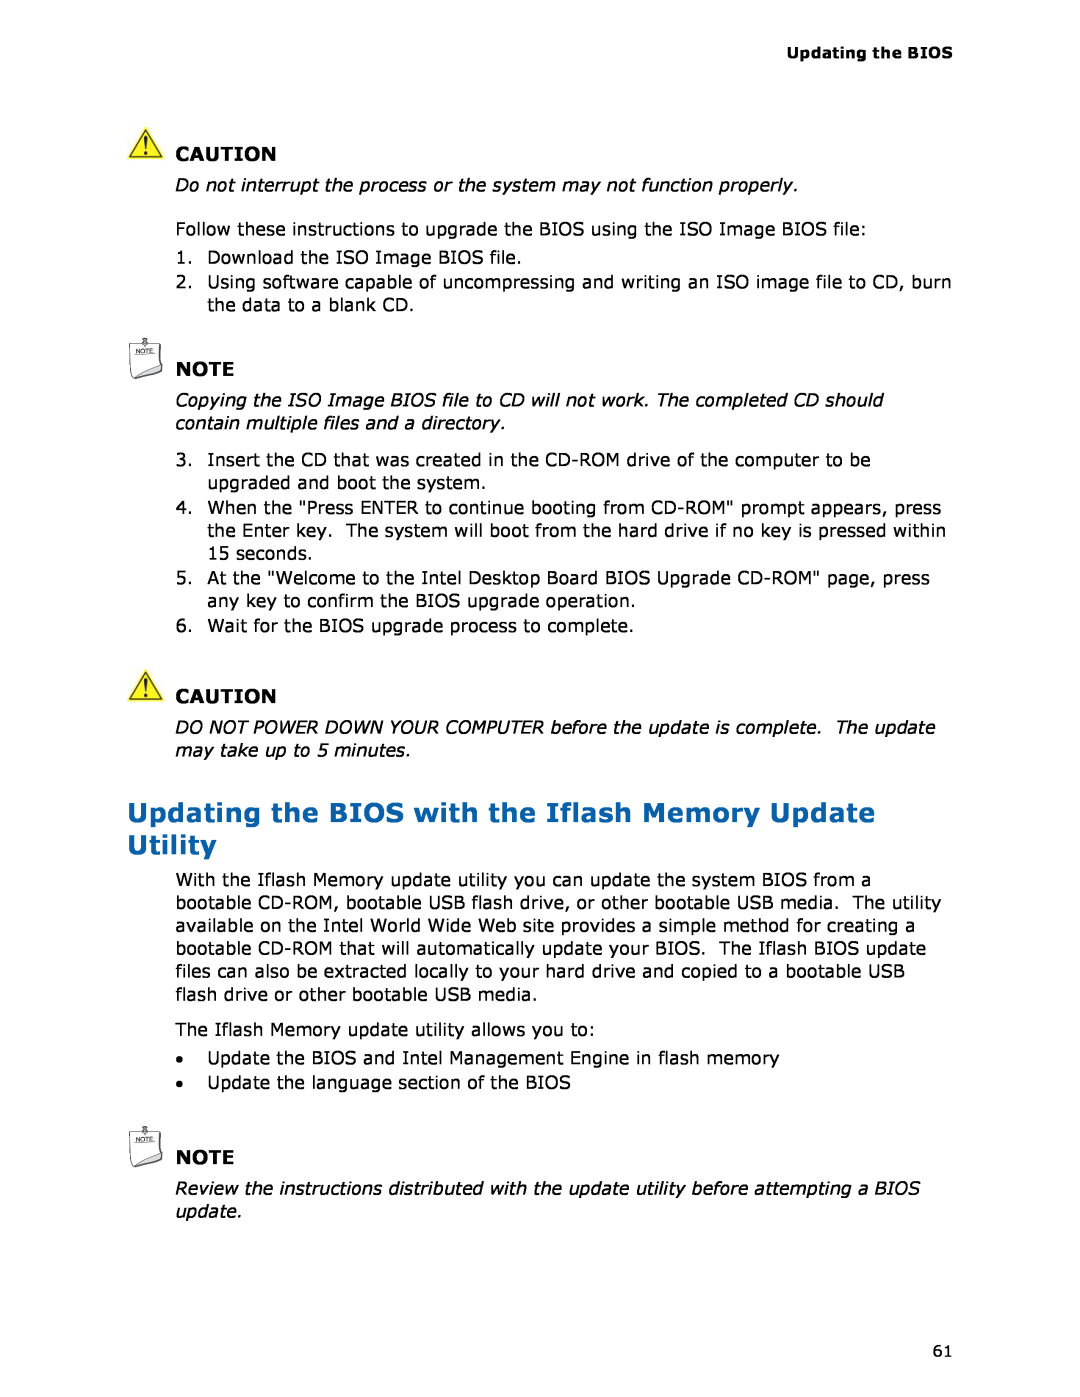 Intel DG35EC, Intel Desktop Board manual Updating the BIOS with the Iflash Memory Update Utility 